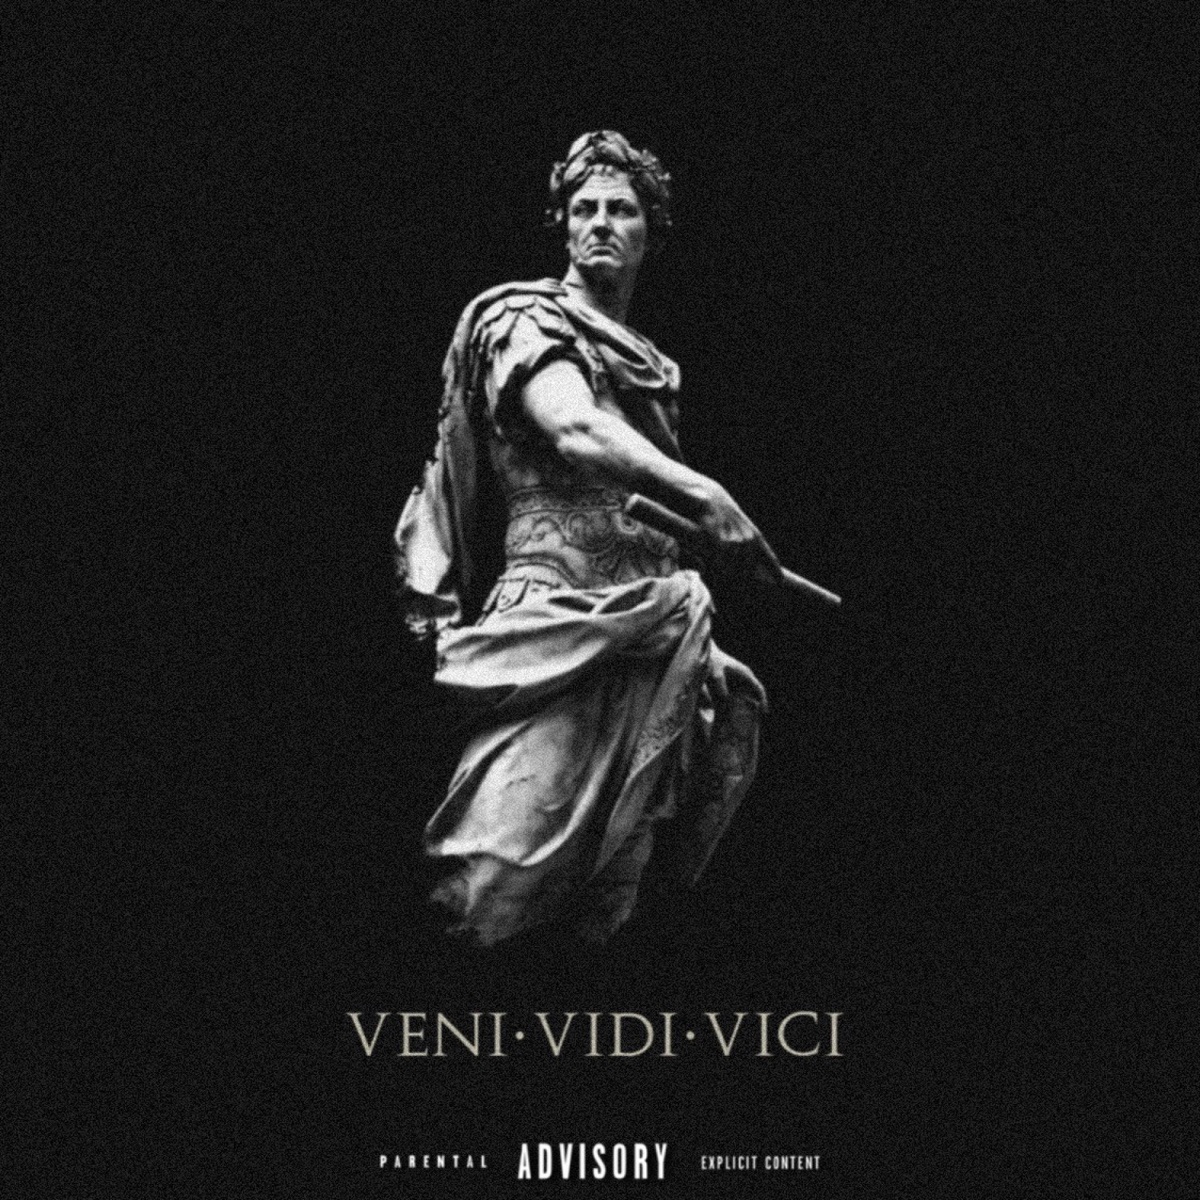 Veni Vidi Vici - Single - Album by King Ca$hFlow - Apple Music